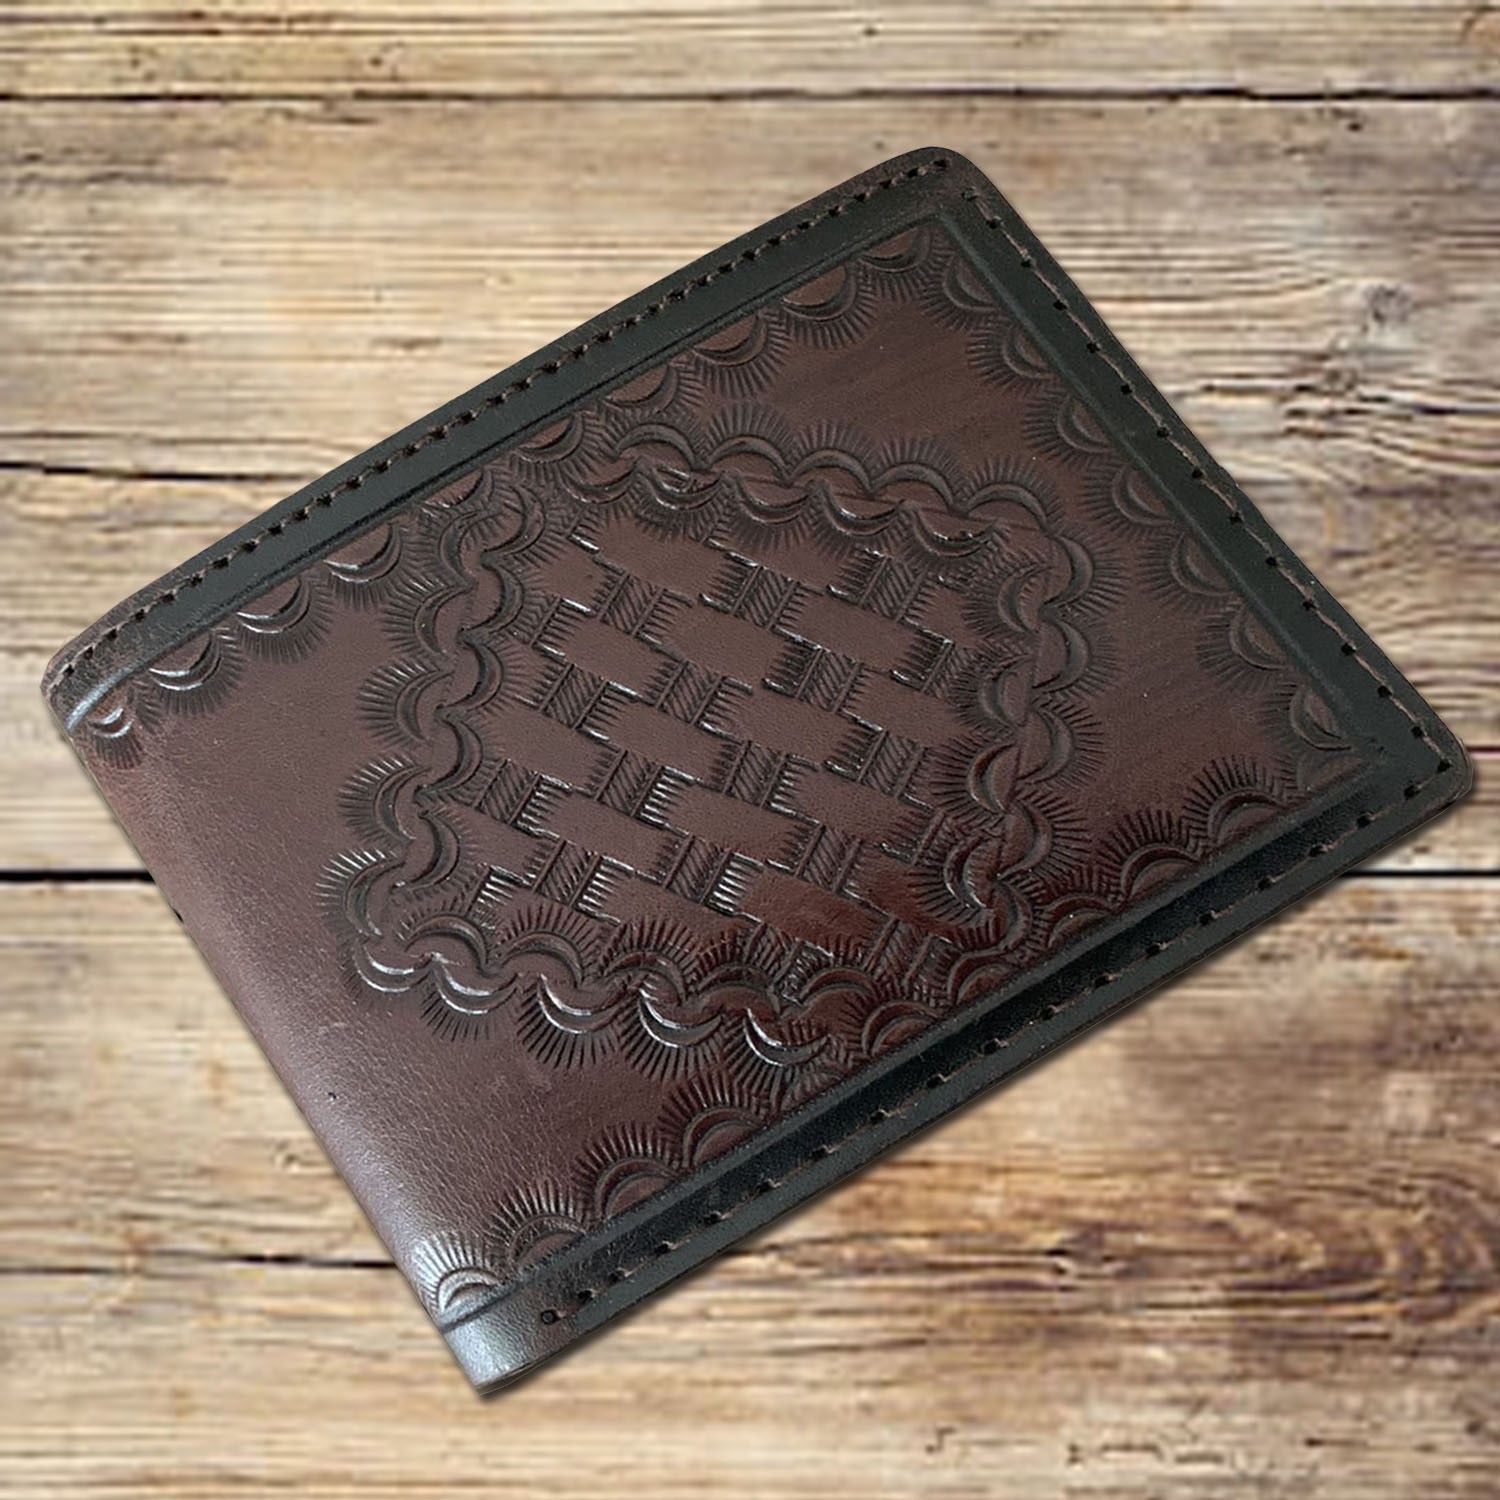 Handmade 10 card bifold leather wallet